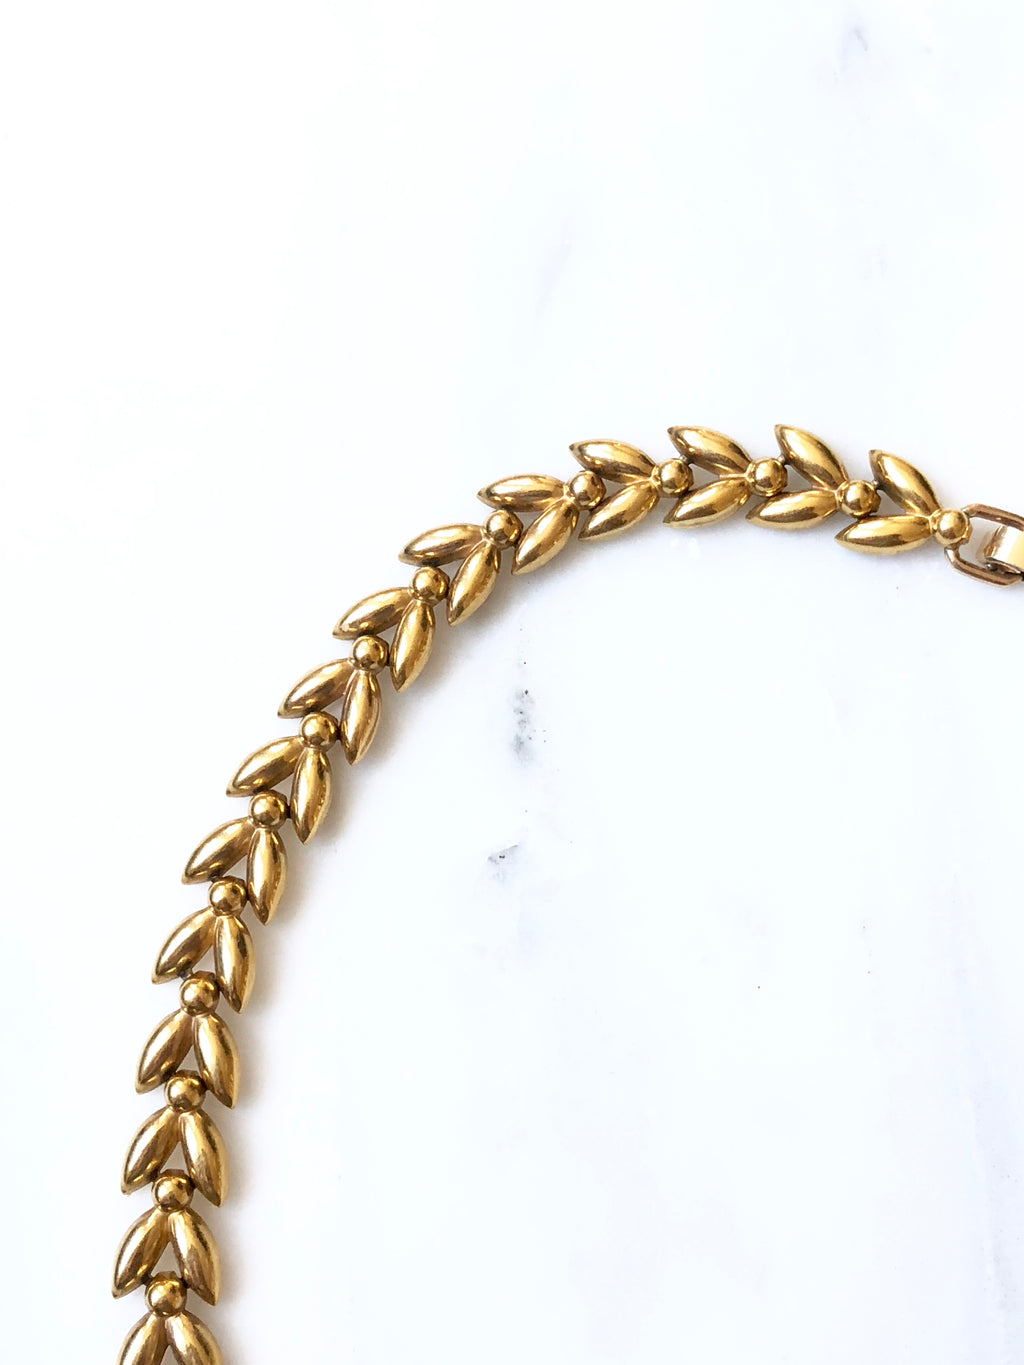 Krementz Ear Of Rice Gold Choker Necklace